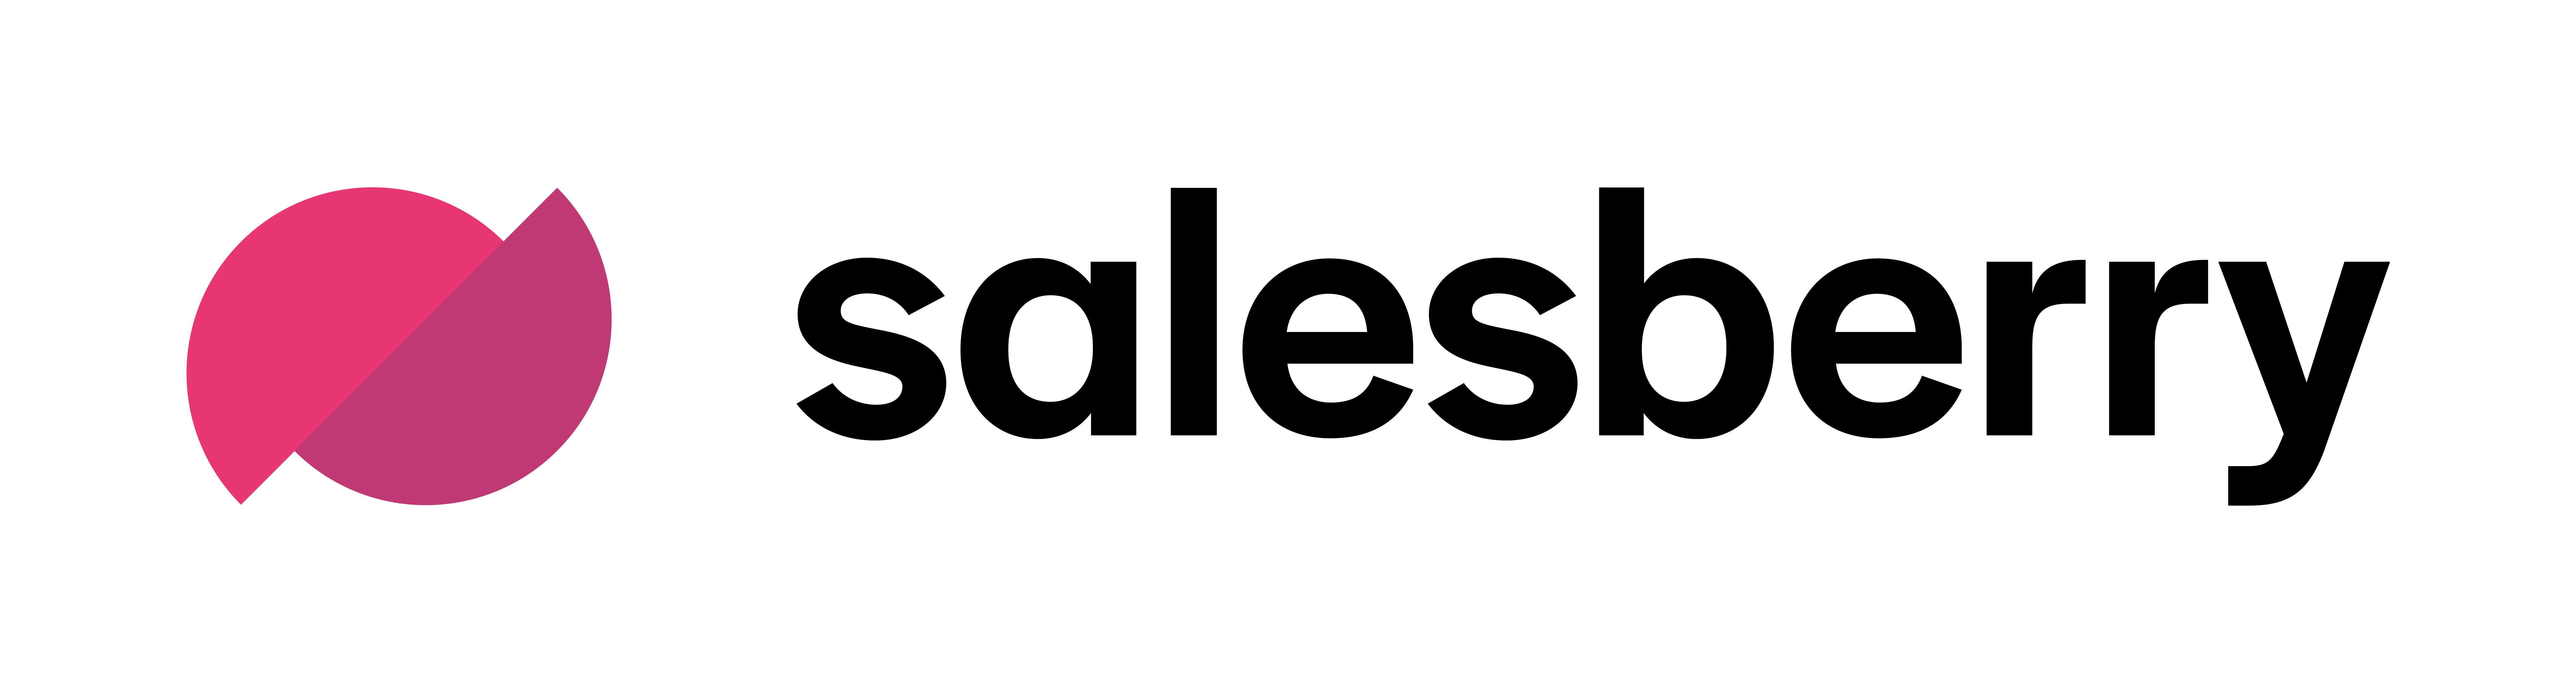 Salesberry logo